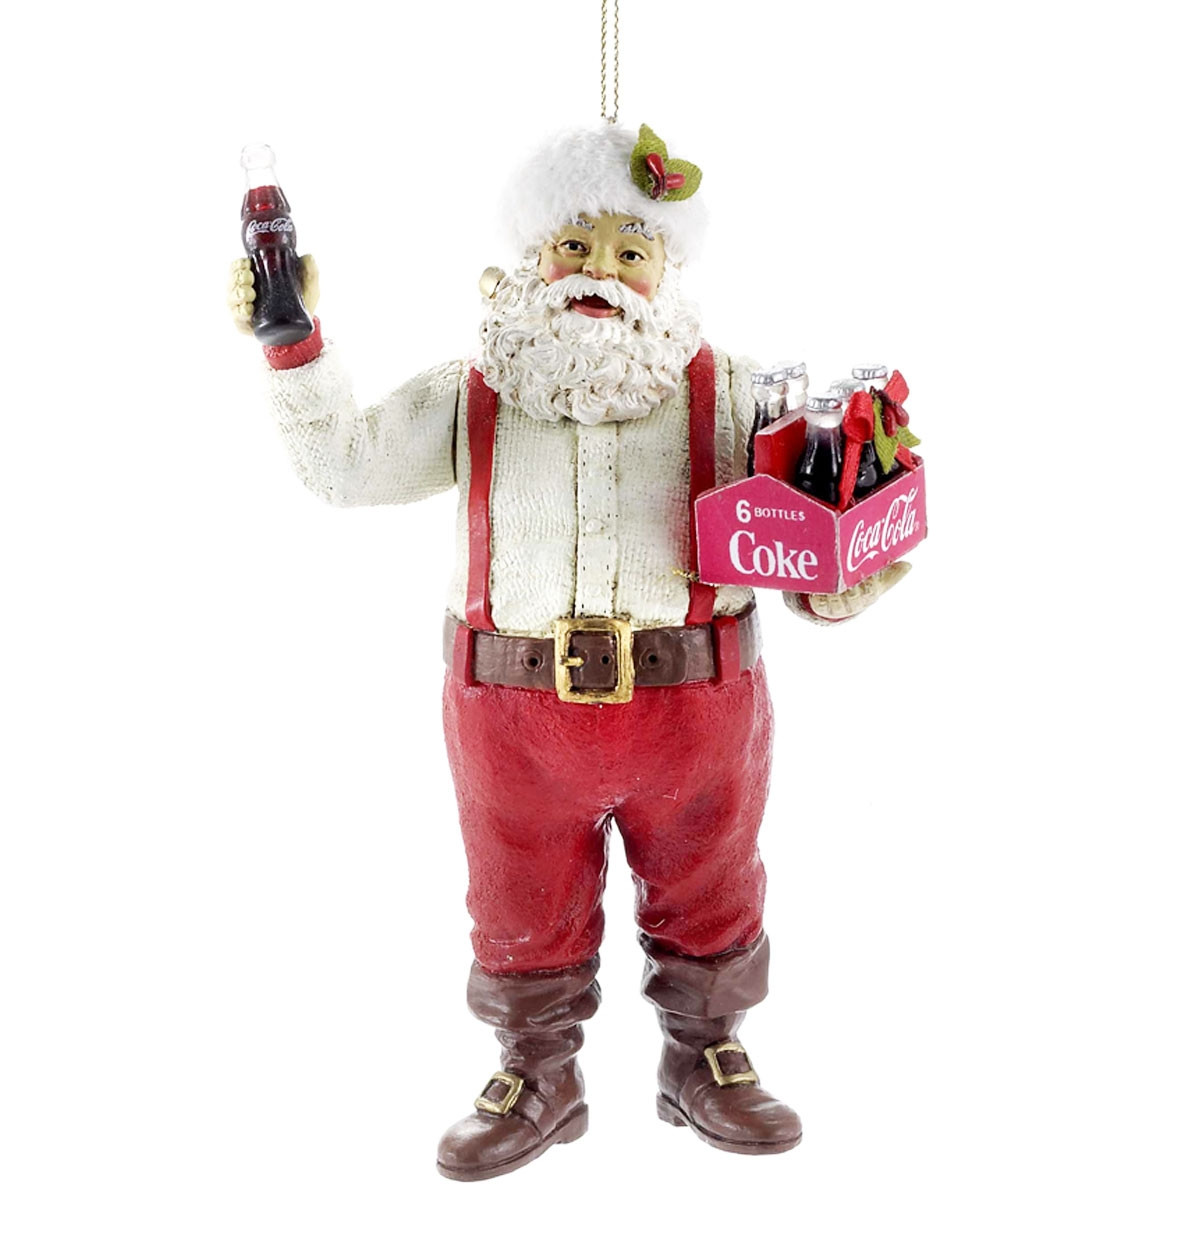 Coca-Cola Santa Claus Holding 6-pack Christmas Ornament